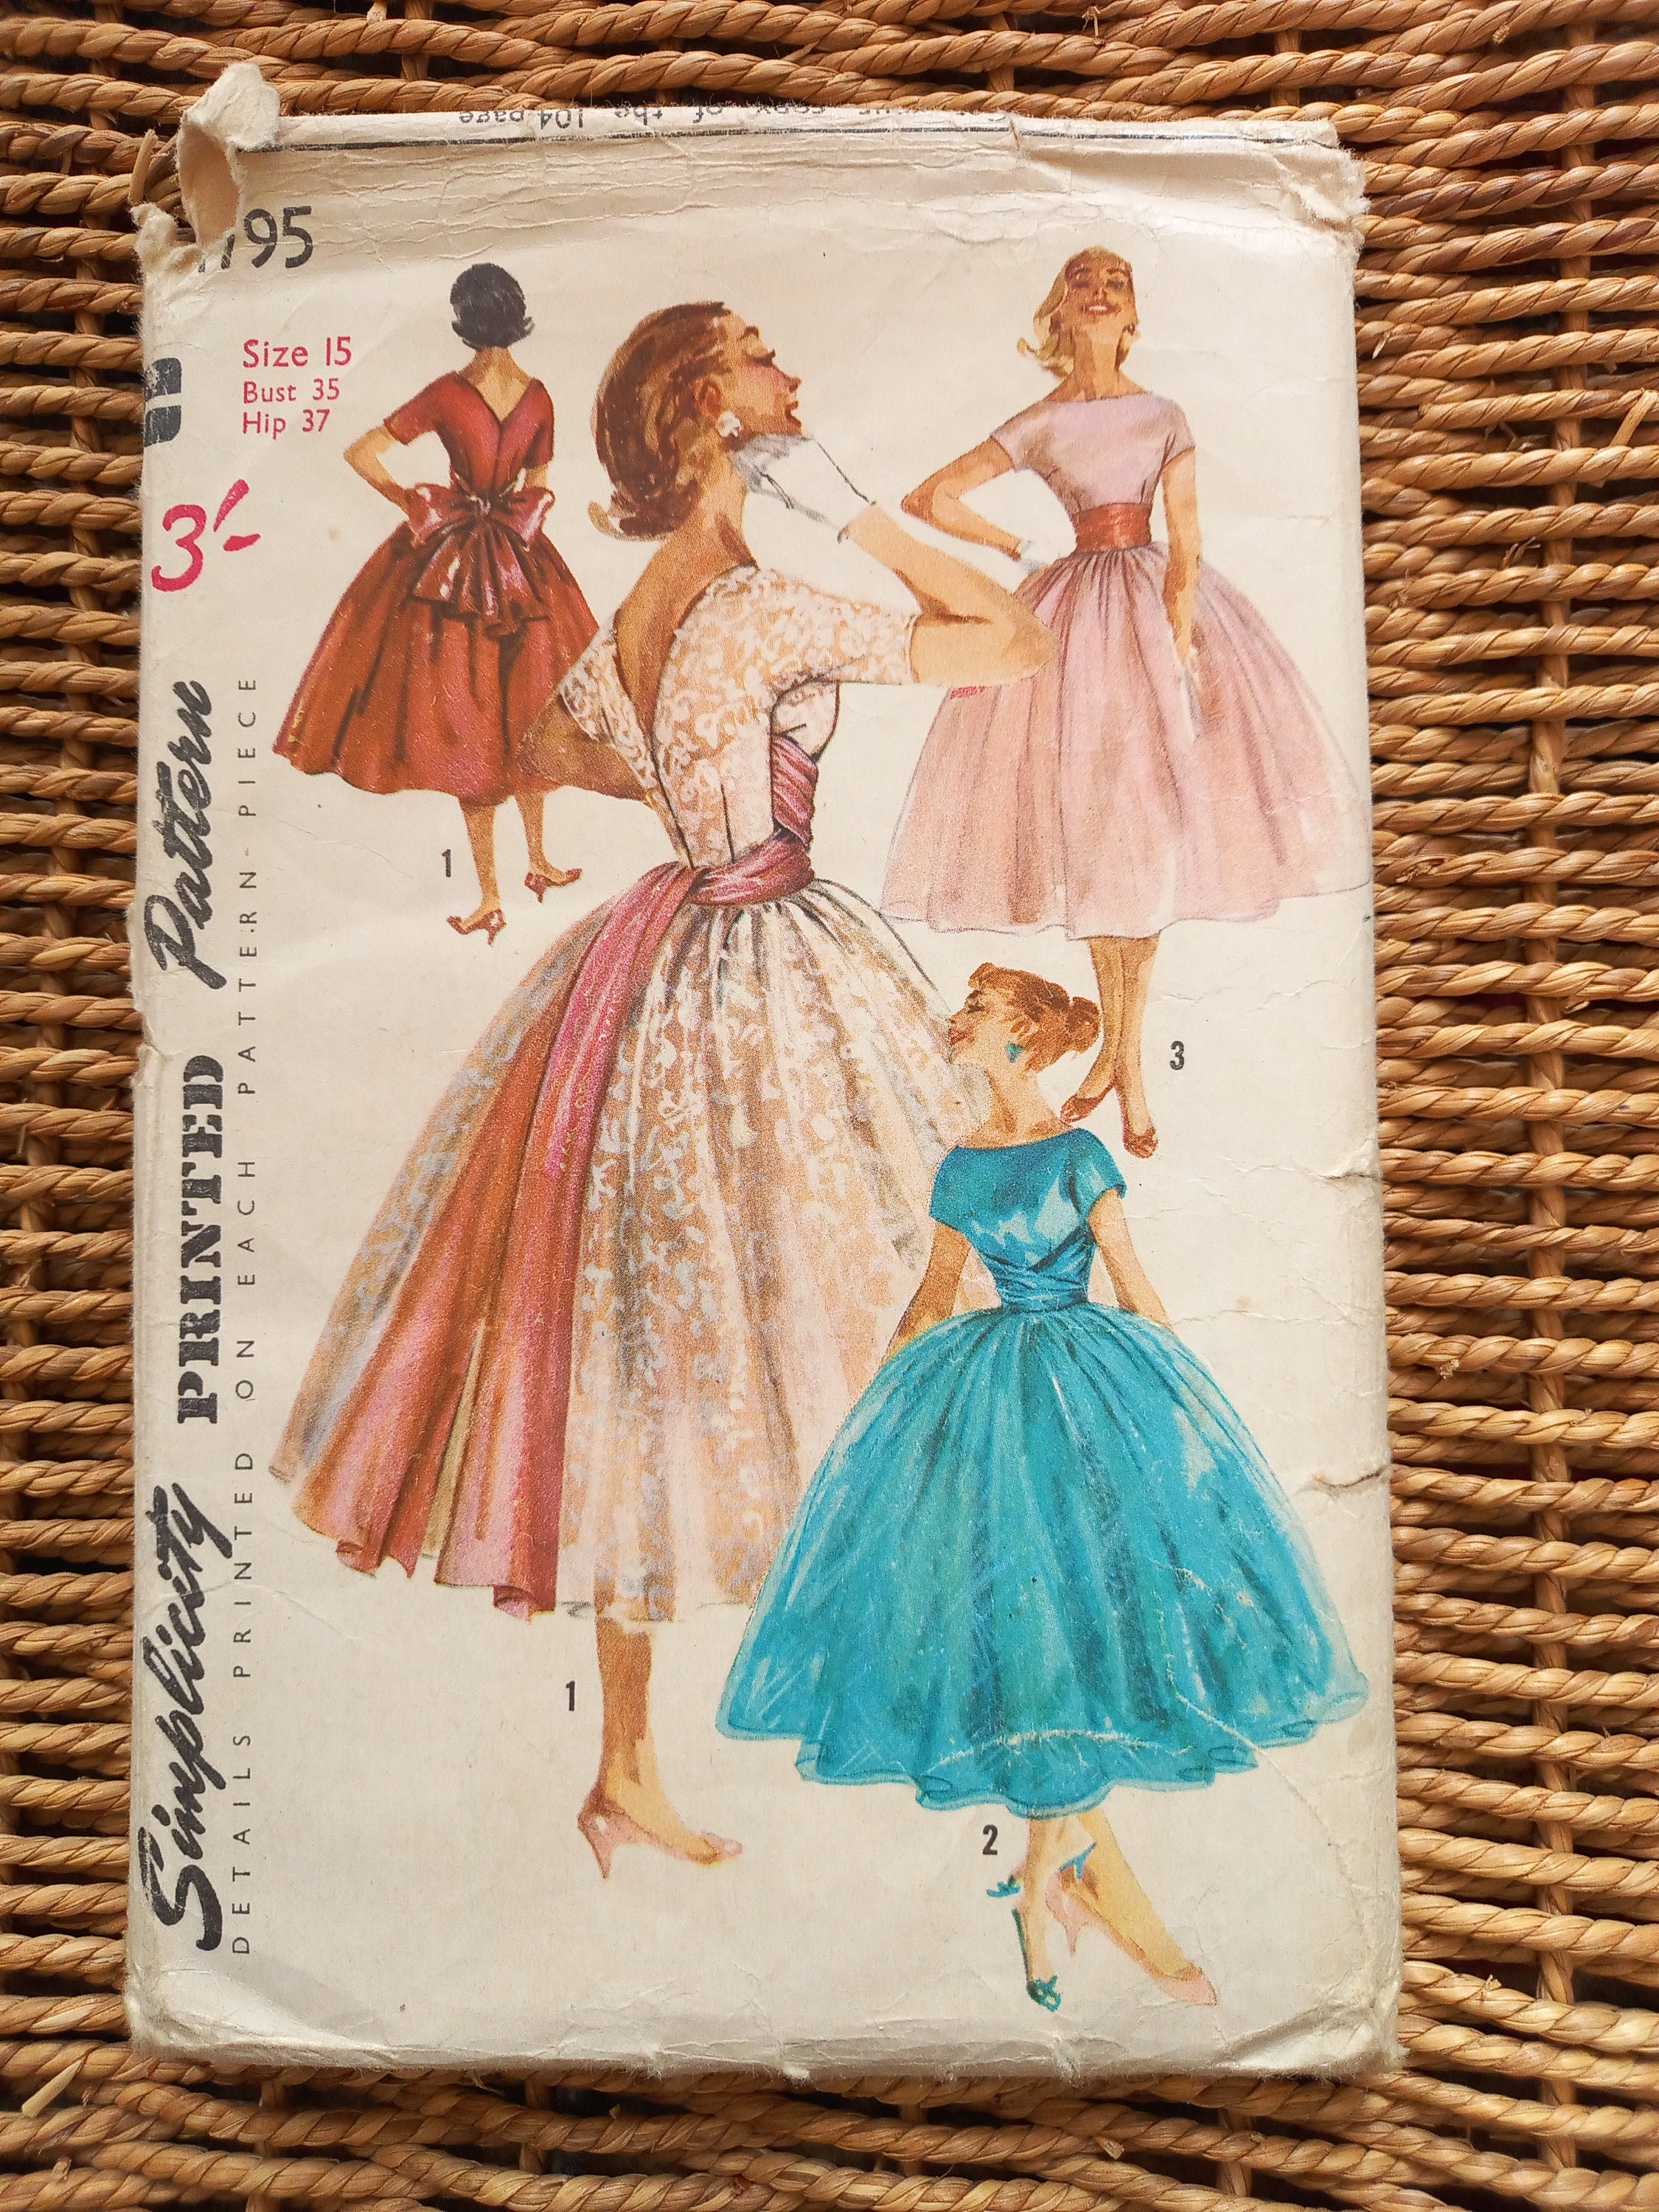 Vintage 1950s Simplicity Sewing Pattern 1795 Bust 35 Size 15 Fit 'n Flare  Dress & Huge Cumberbund Teen Rockabilly Rock 'n Roll Prom 